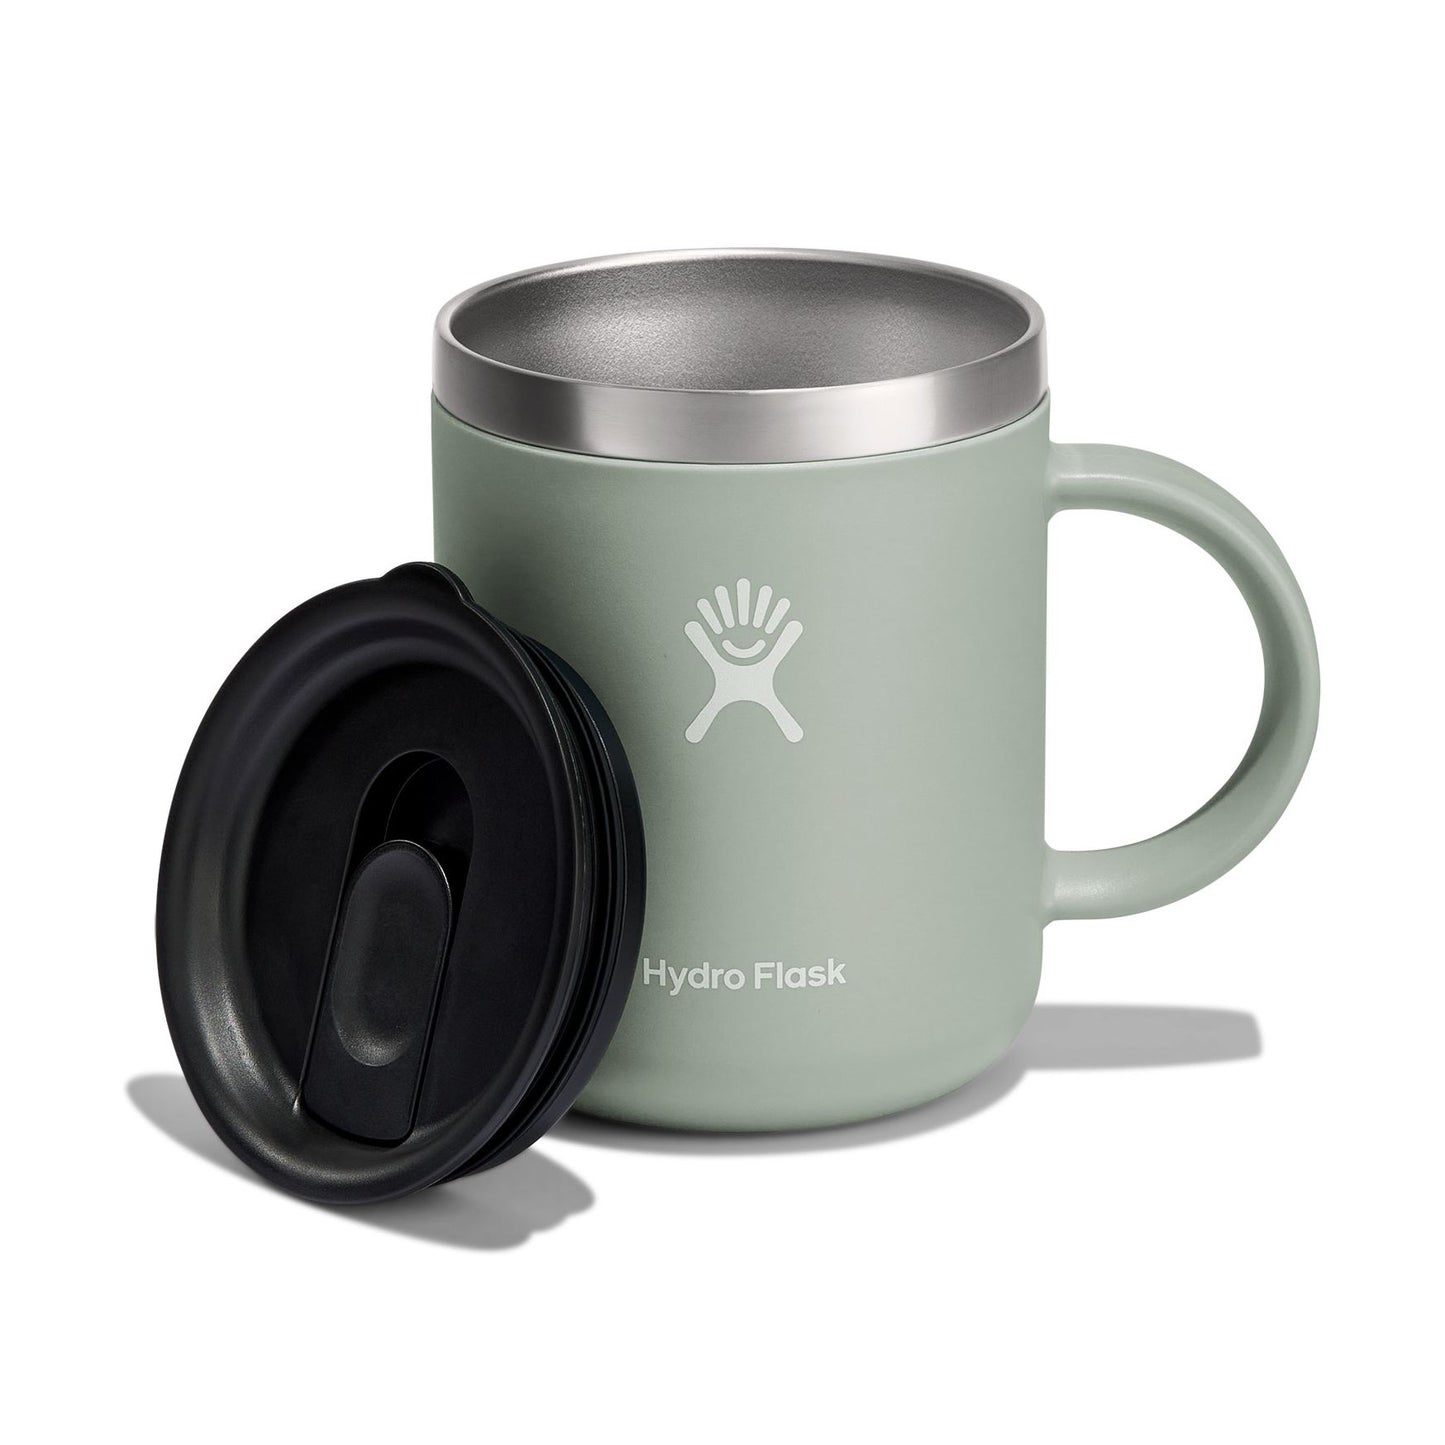 Hydro Flask Coffee Mug - Kaffekopp Med Lokk, 354ml (12oz)